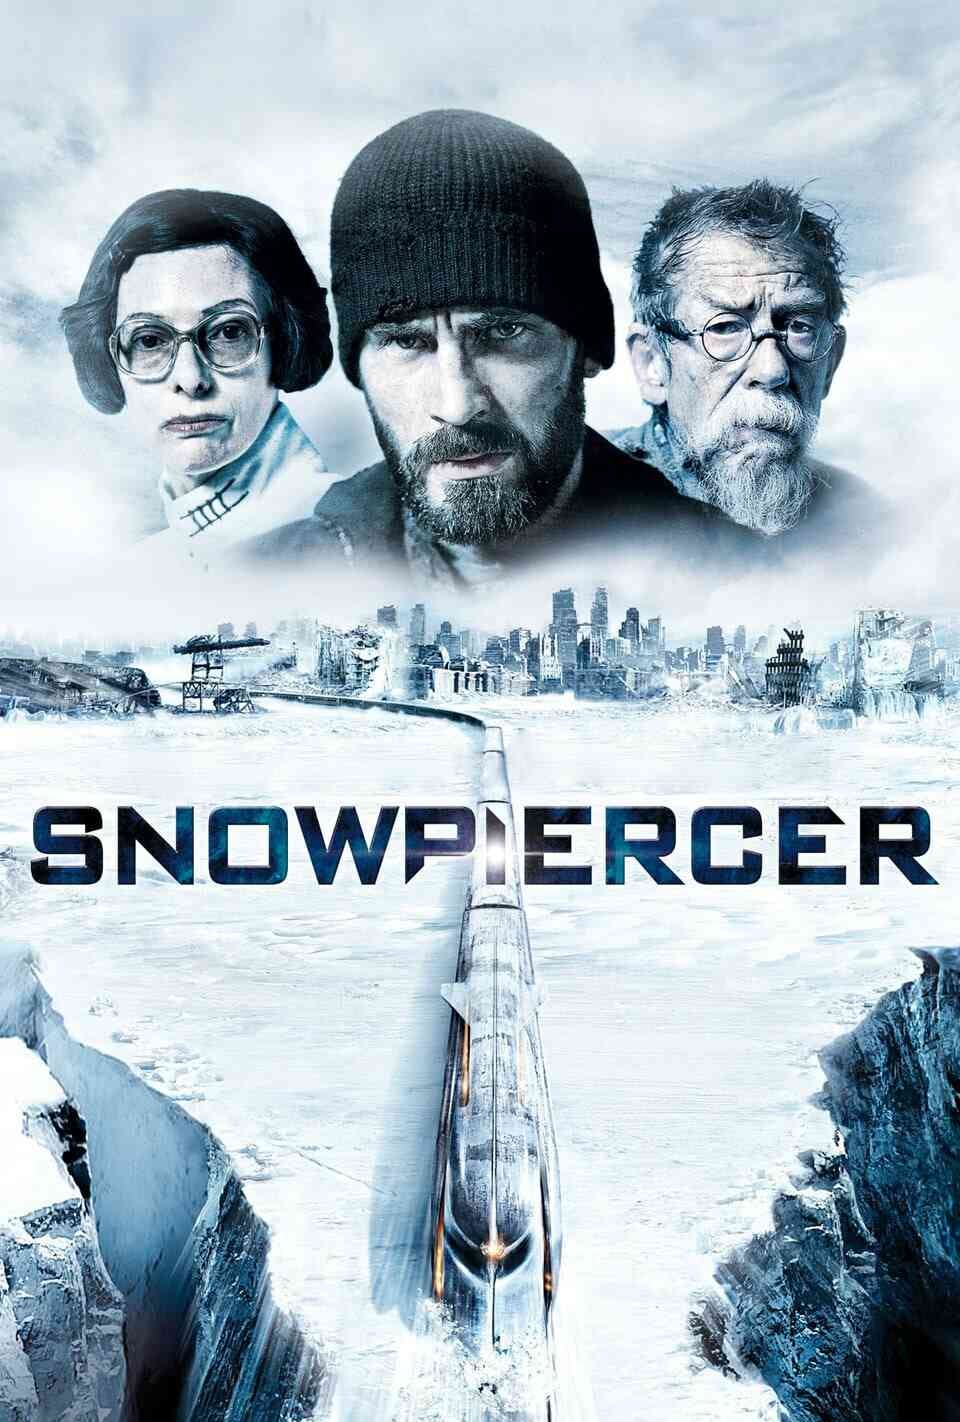 Read Snowpiercer screenplay (poster)